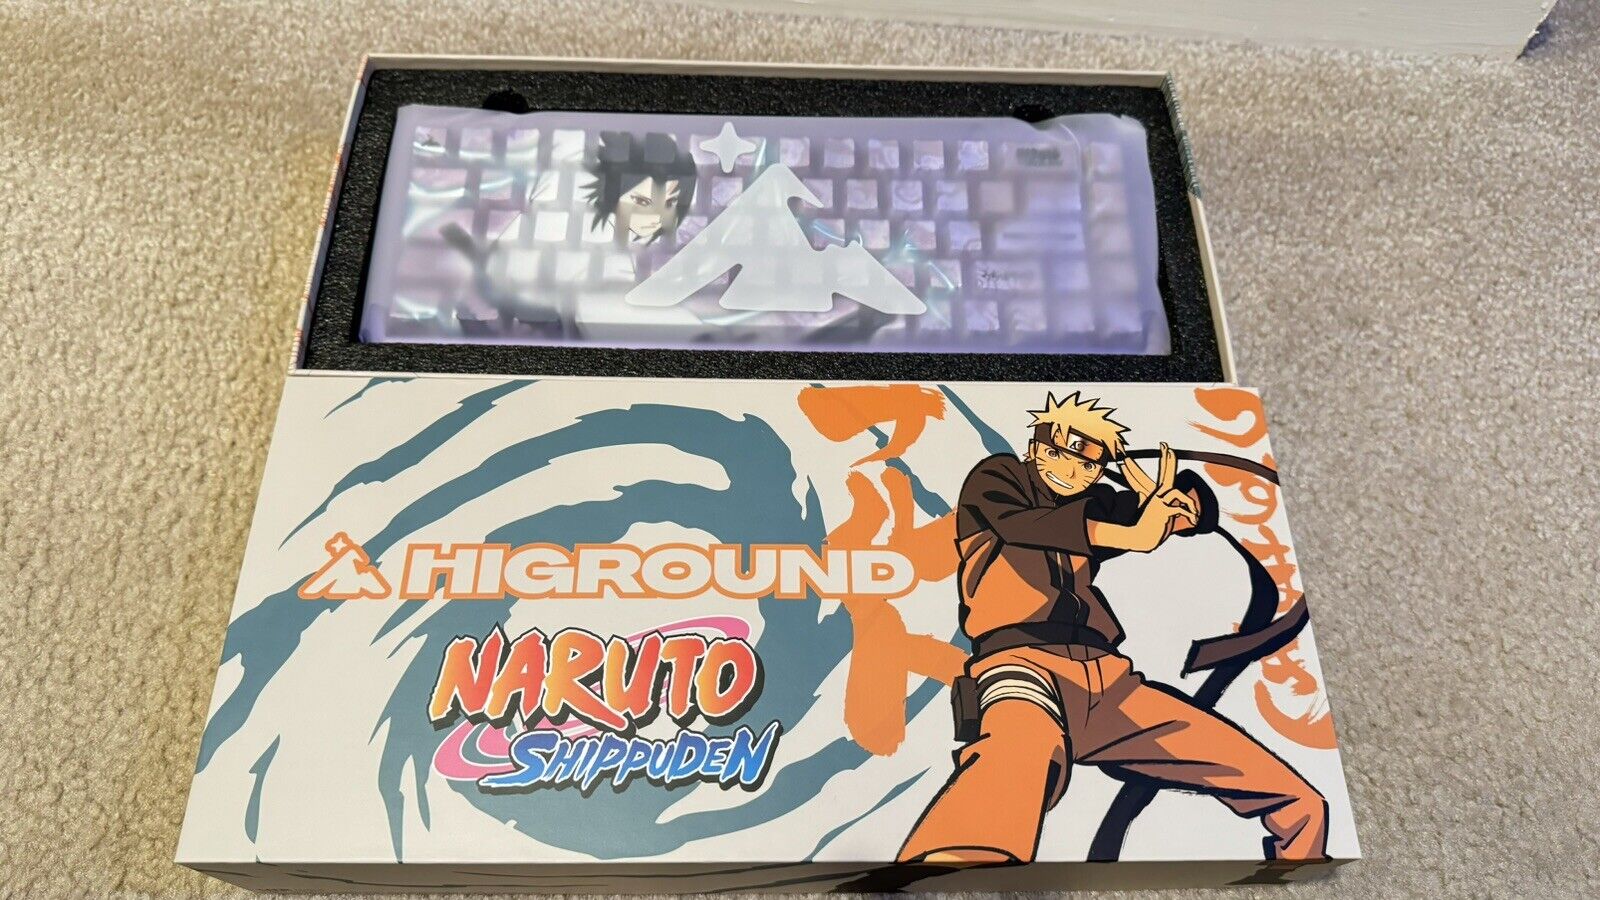 Naruto x HiGround Summit 65 Keyboard - Sasuke